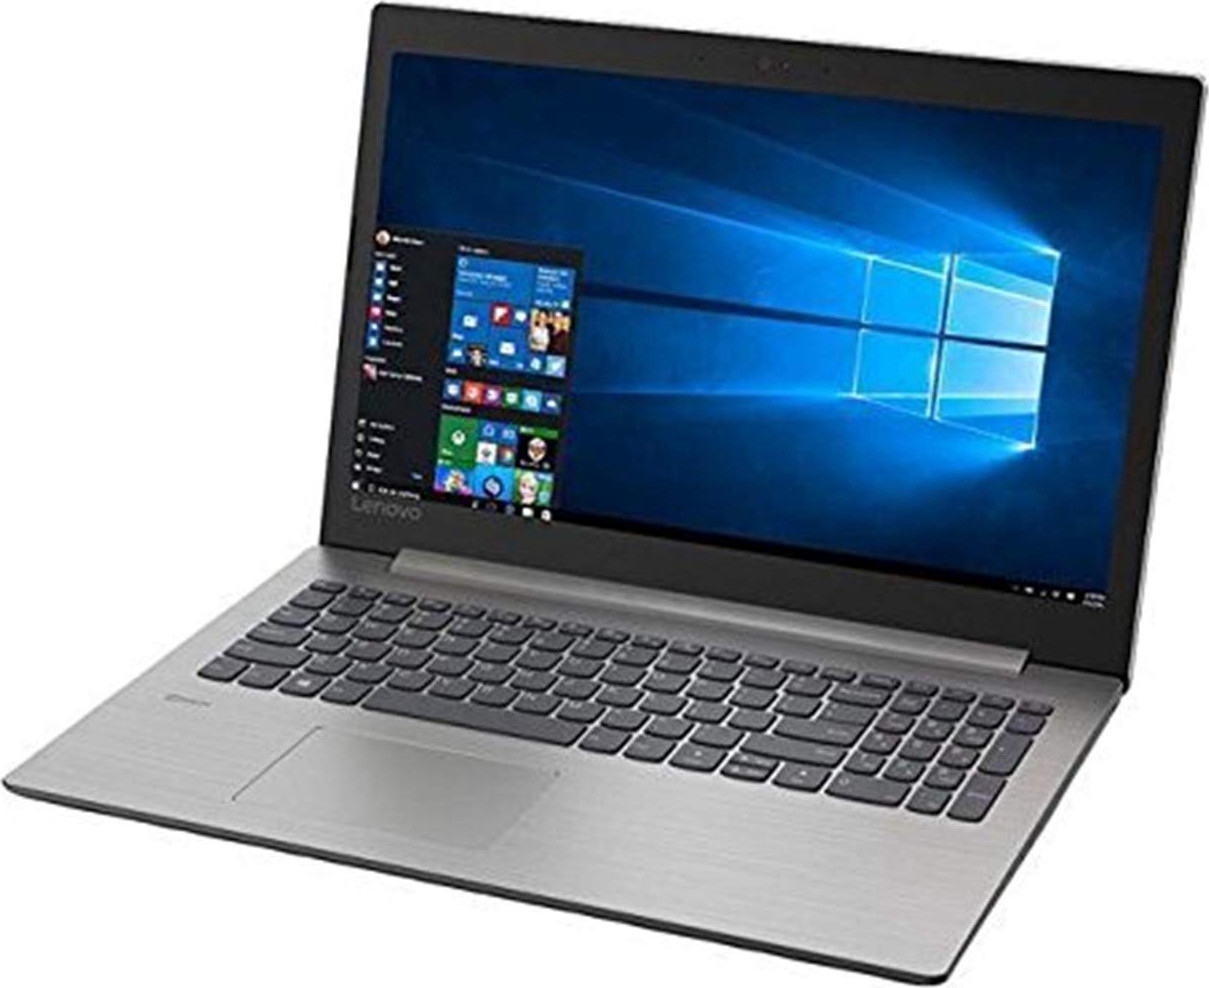 2019 Lenovo Ideapad 330 15.6" Touchscreen Laptop Computer, 8th Gen Intel Quad-Core i5-8250U Up to 3.4GHz (Beat i7-7500U), 8GB DDR4, 1TB HDD, DVDRW, Bluetooth 4.1, 802.11AC WiFi, HDMI, Windows 10